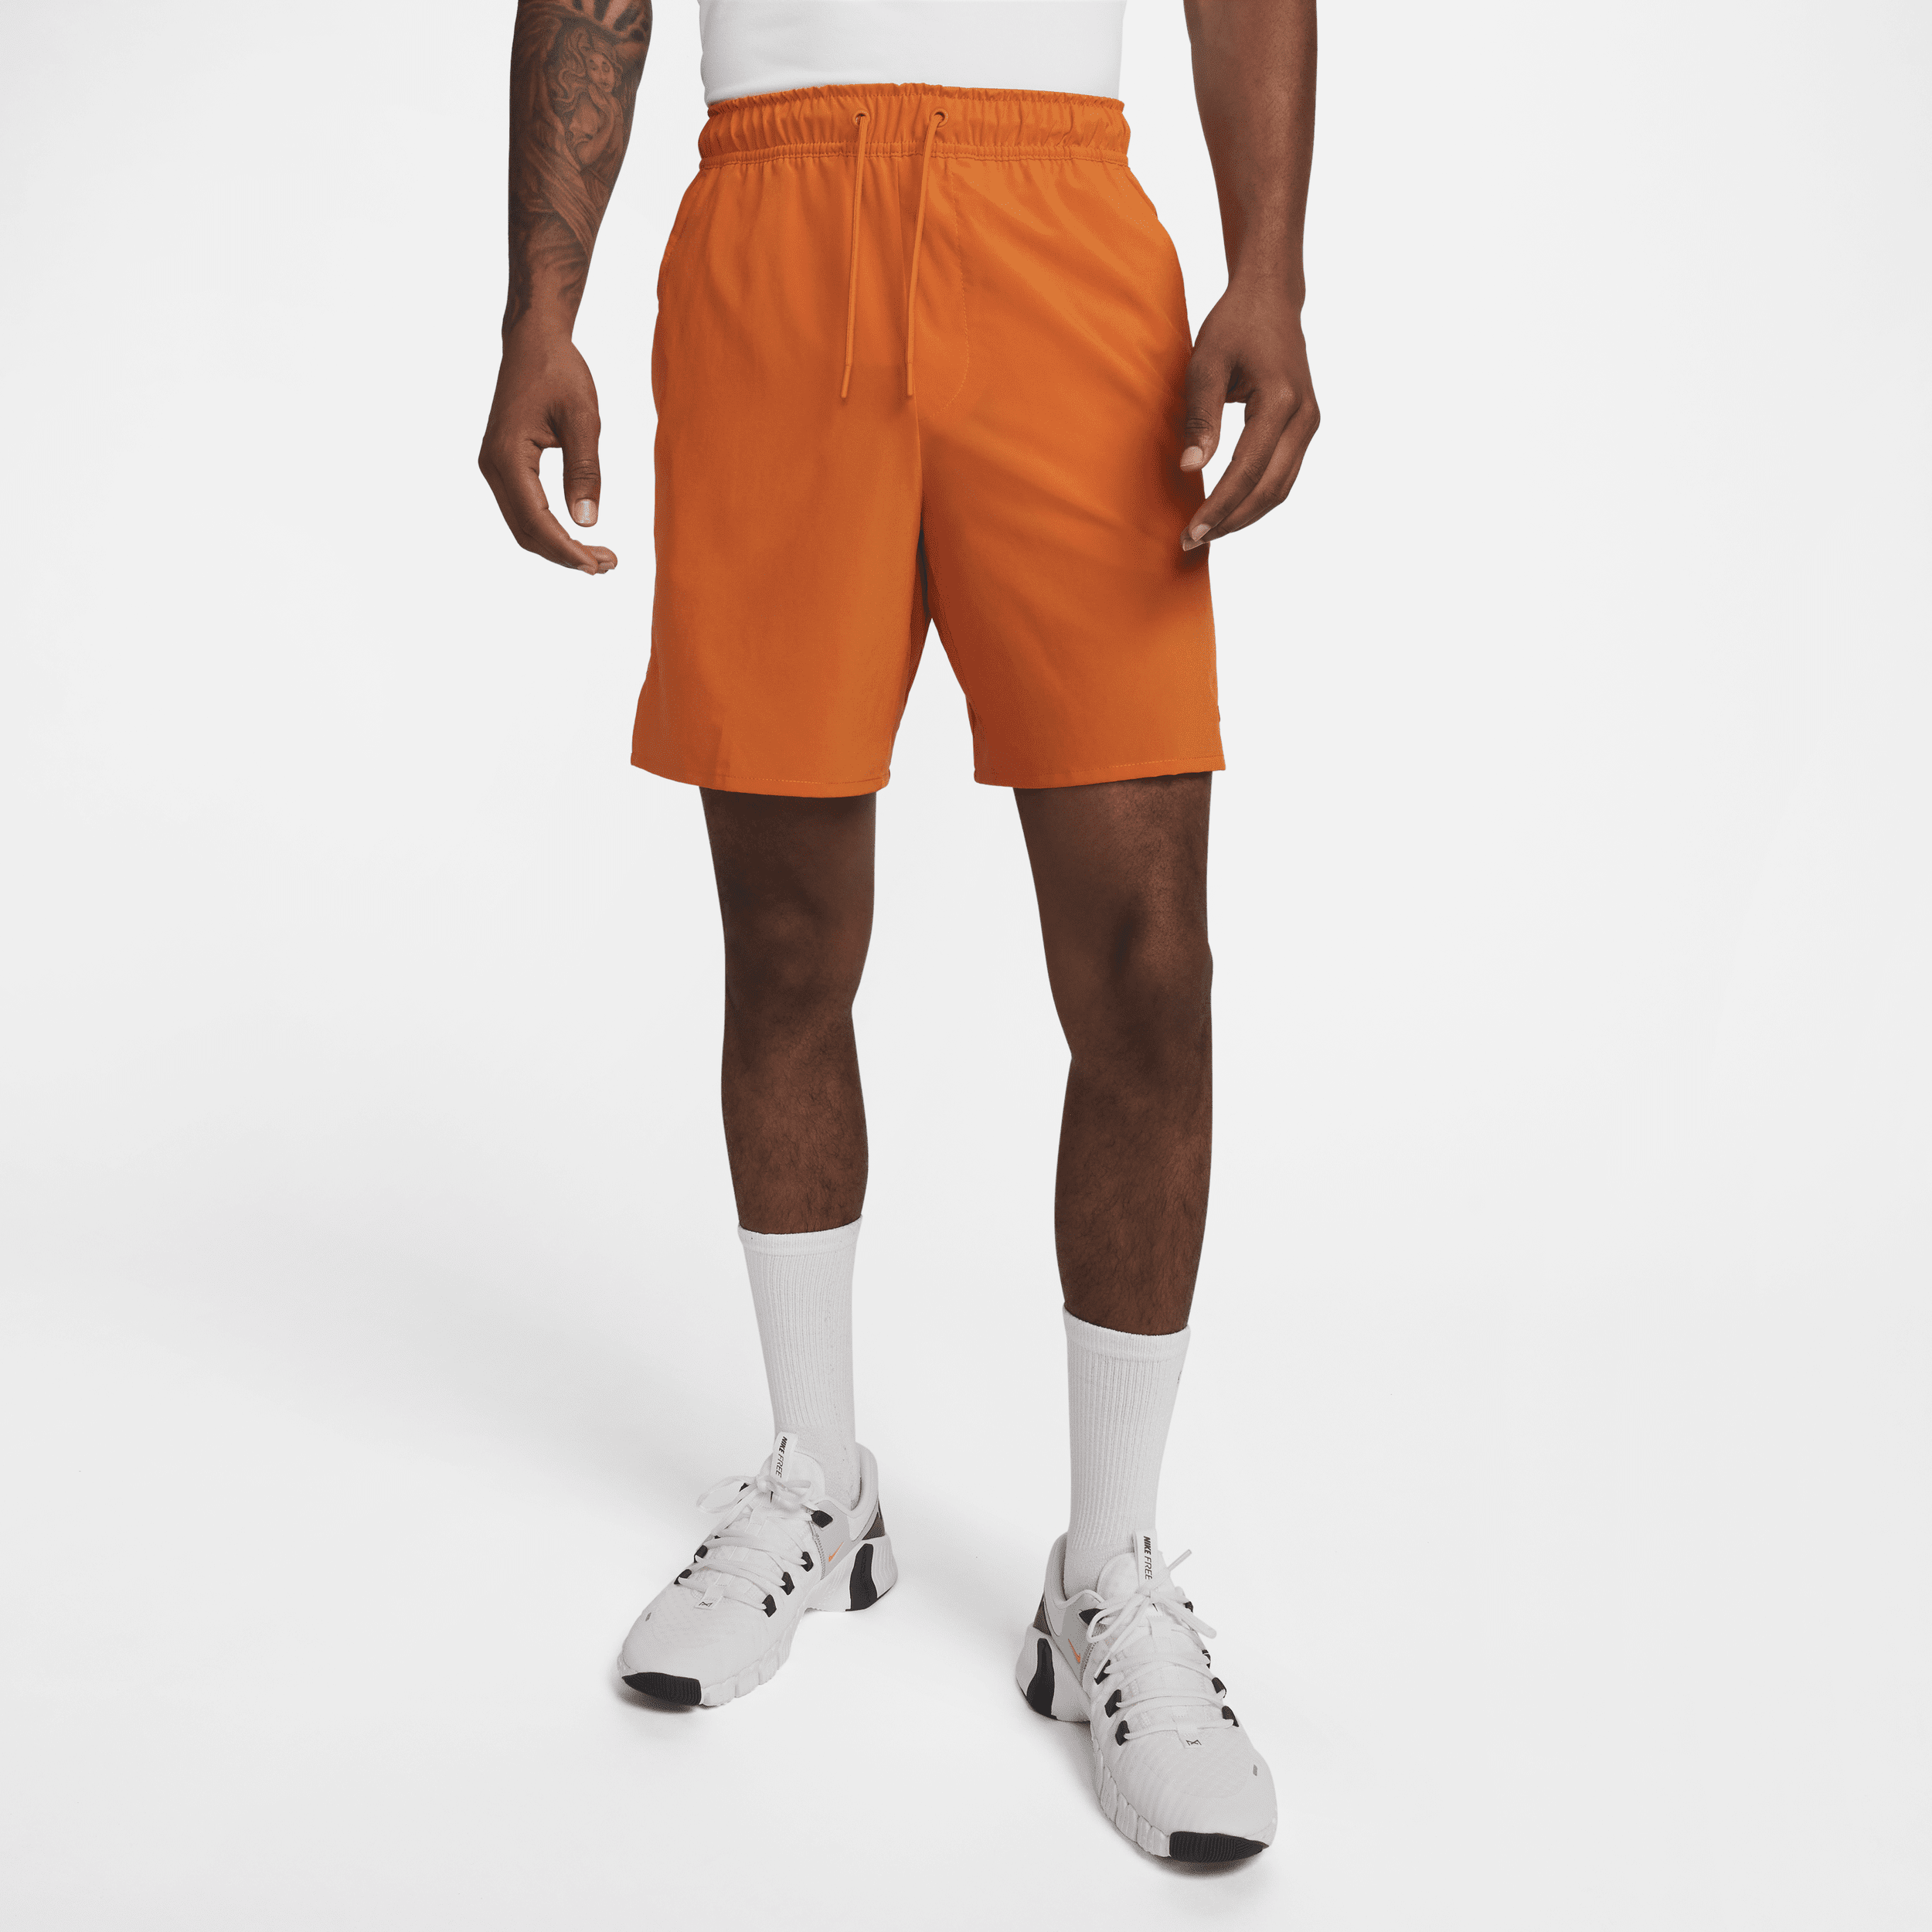 Nike Unlimited Pantalón corto Dri-FIT versátil de 18 cm sin forro - Hombre - Naranja